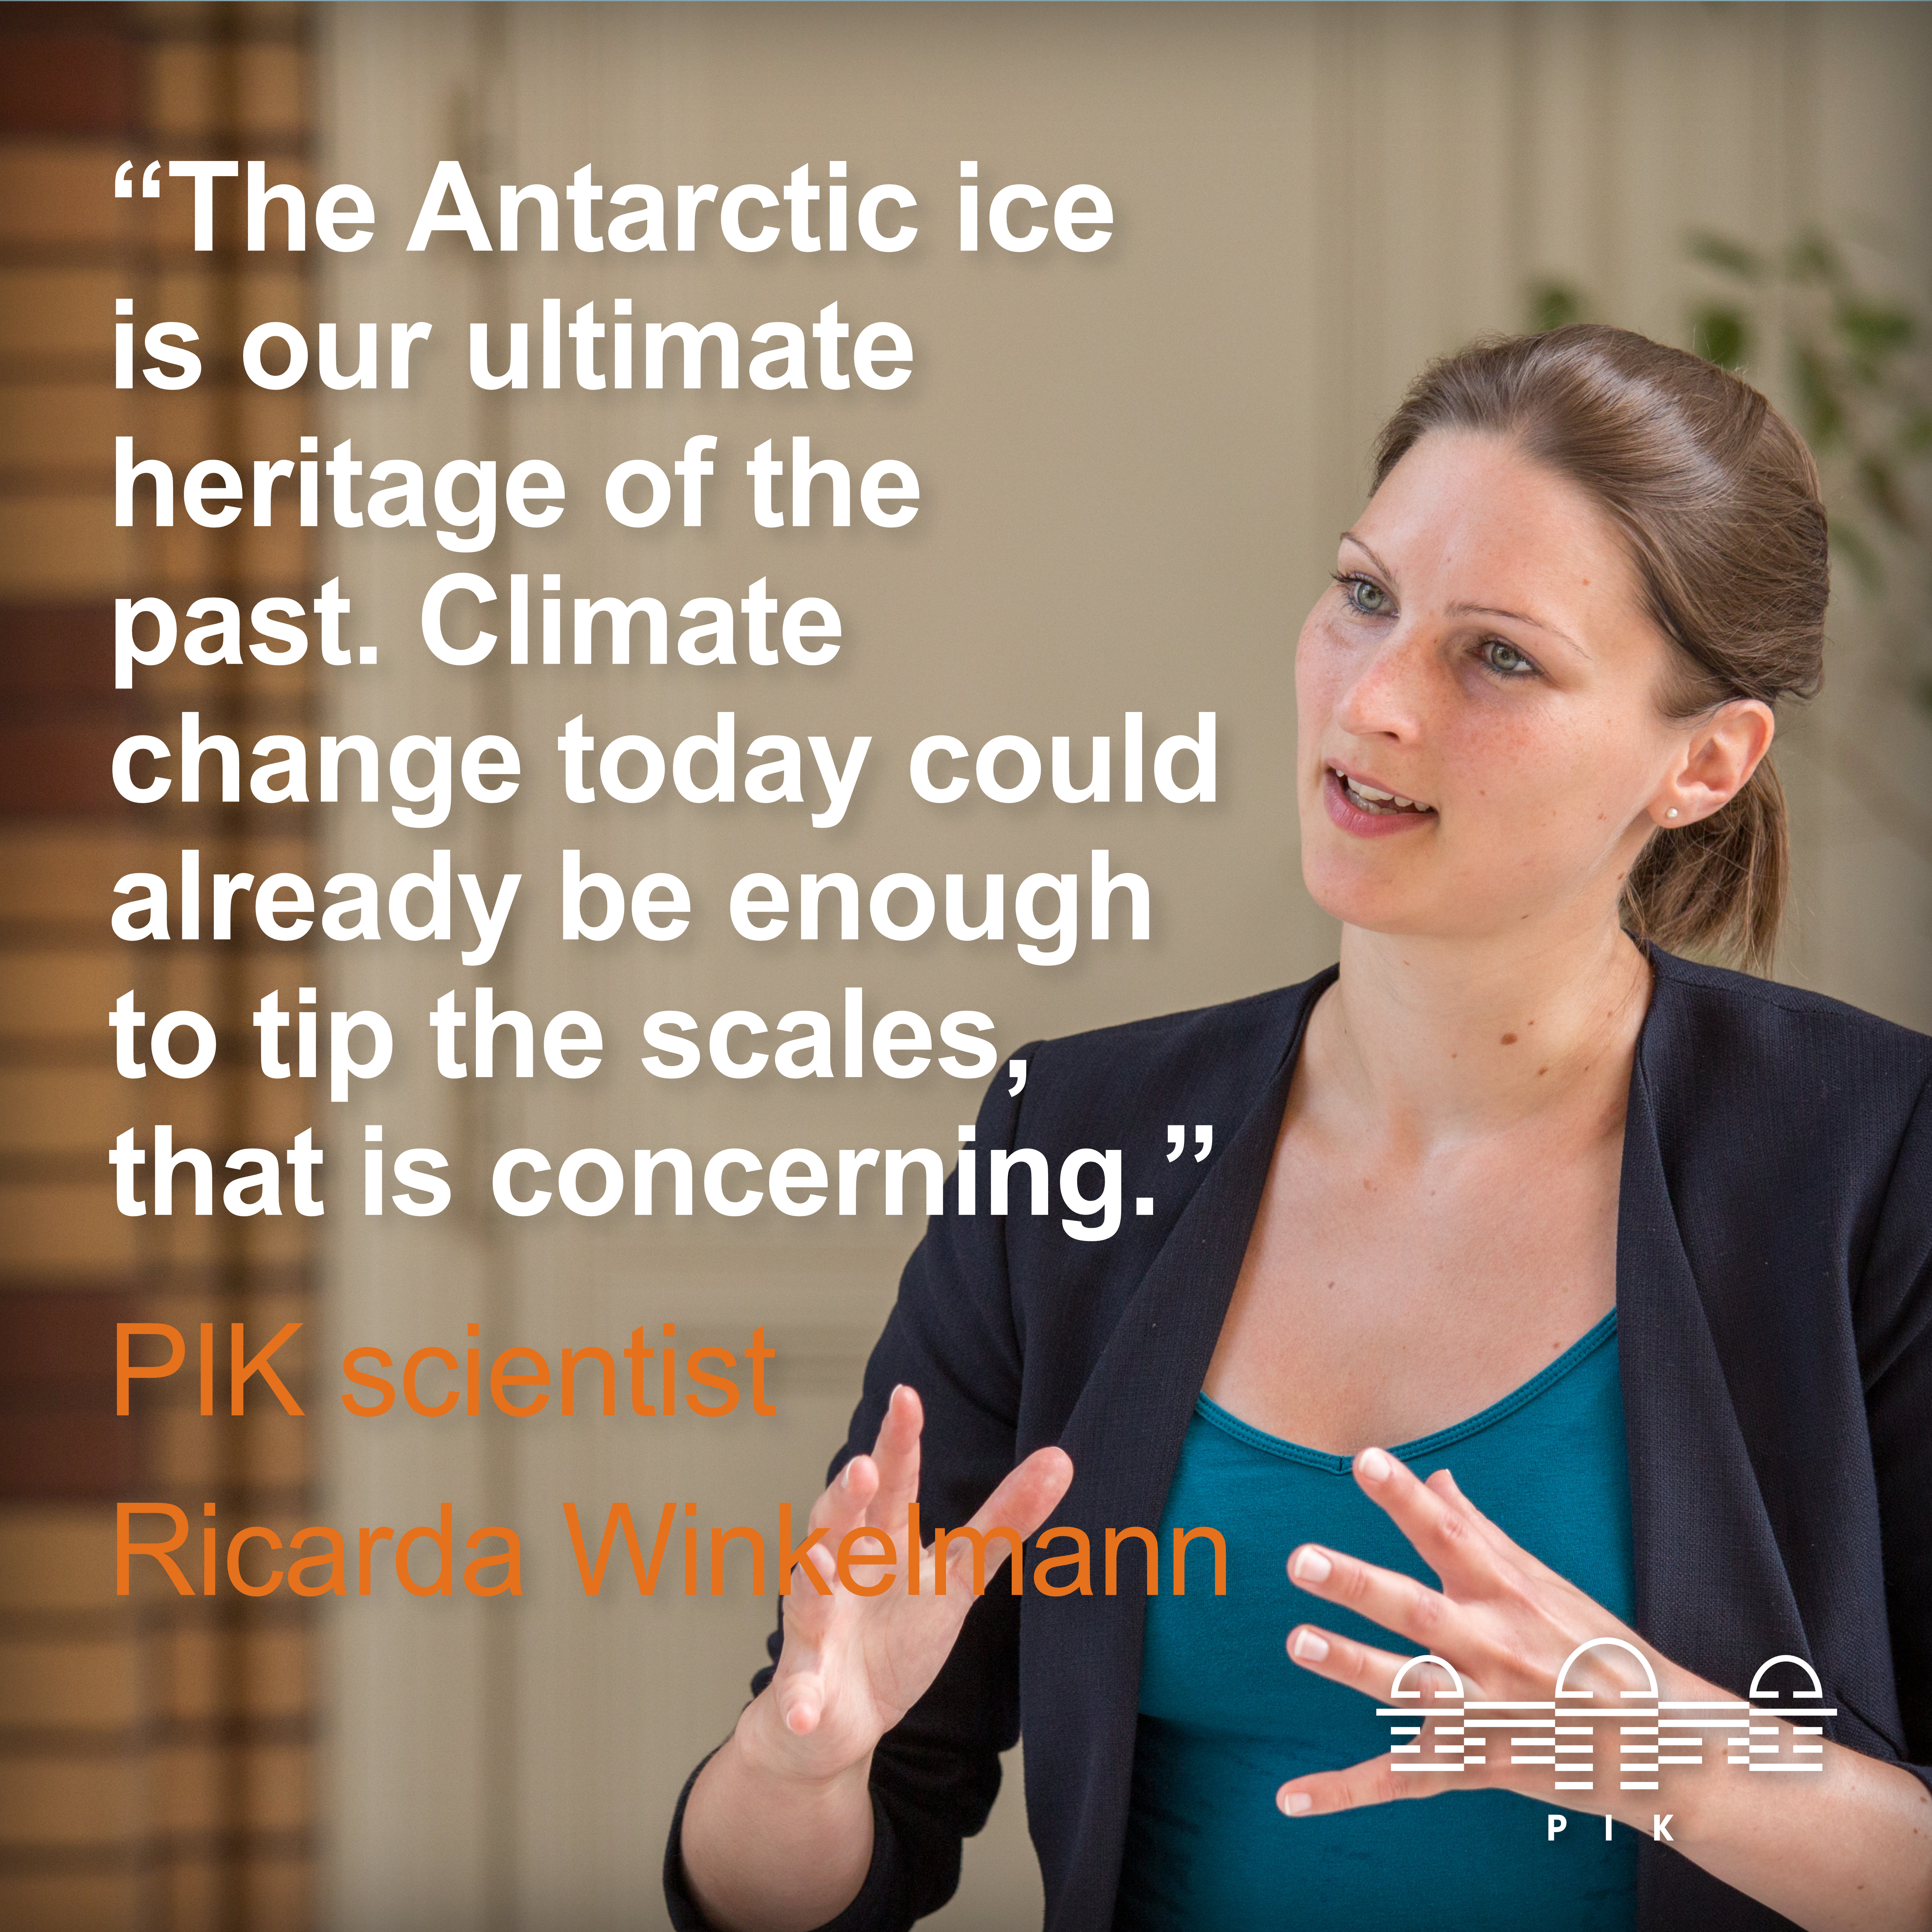 Antarctic Ice under climate change threat